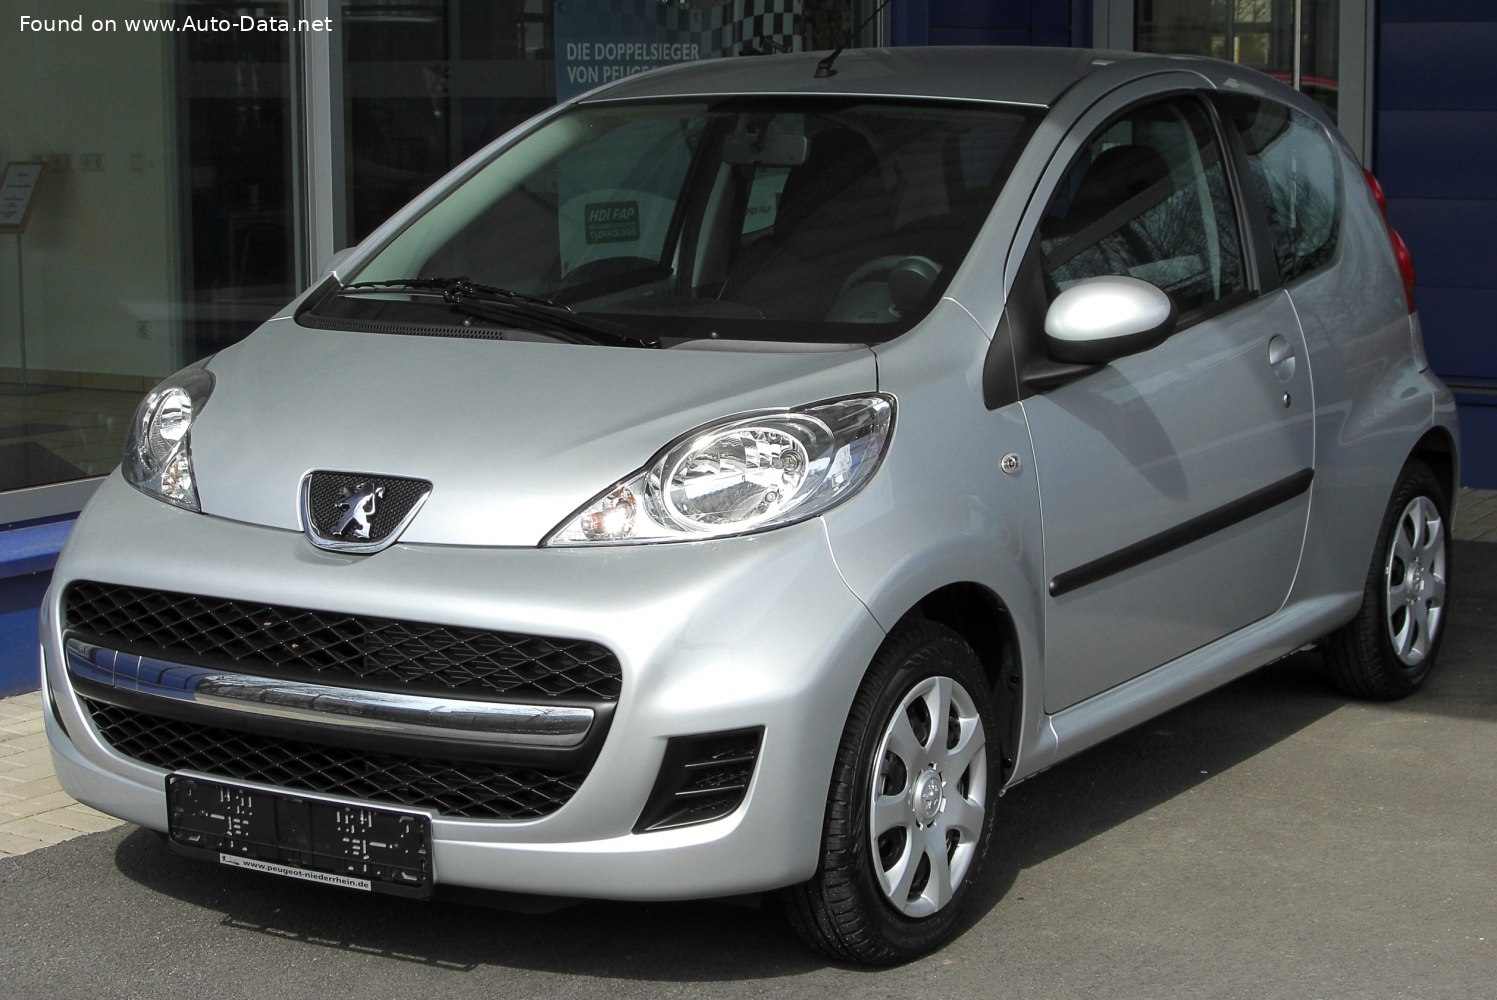 2010 Peugeot 107 (Phase II, 2008) 3-door 1.0 (68 Hp)  Technical specs,  data, fuel consumption, Dimensions